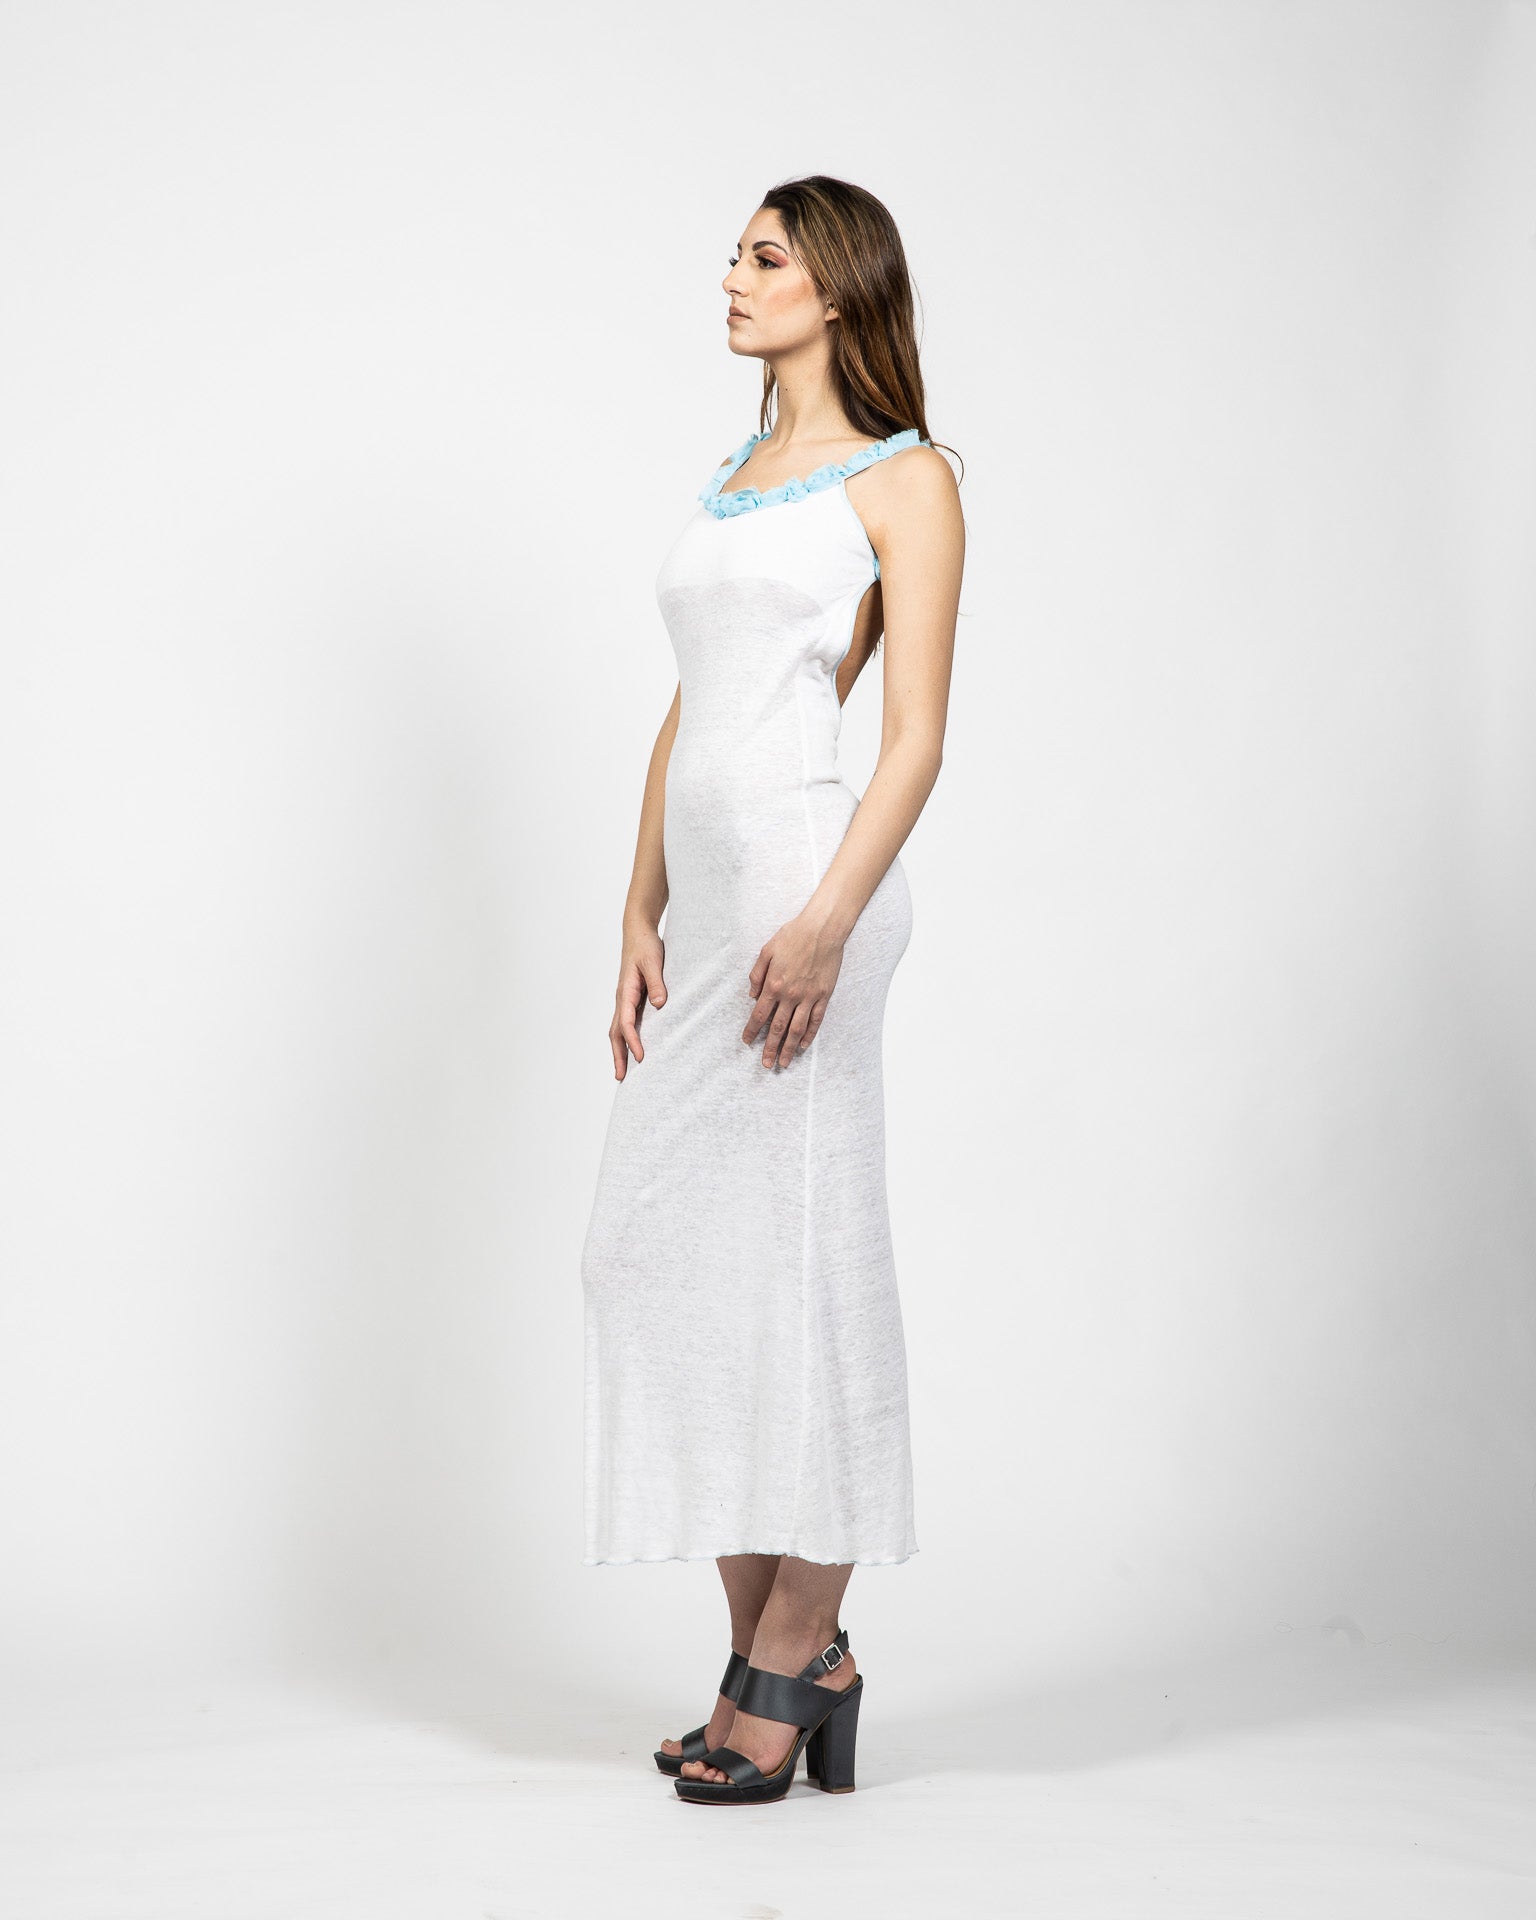 Long White Linen Dress - Side View - Samuel Vartan